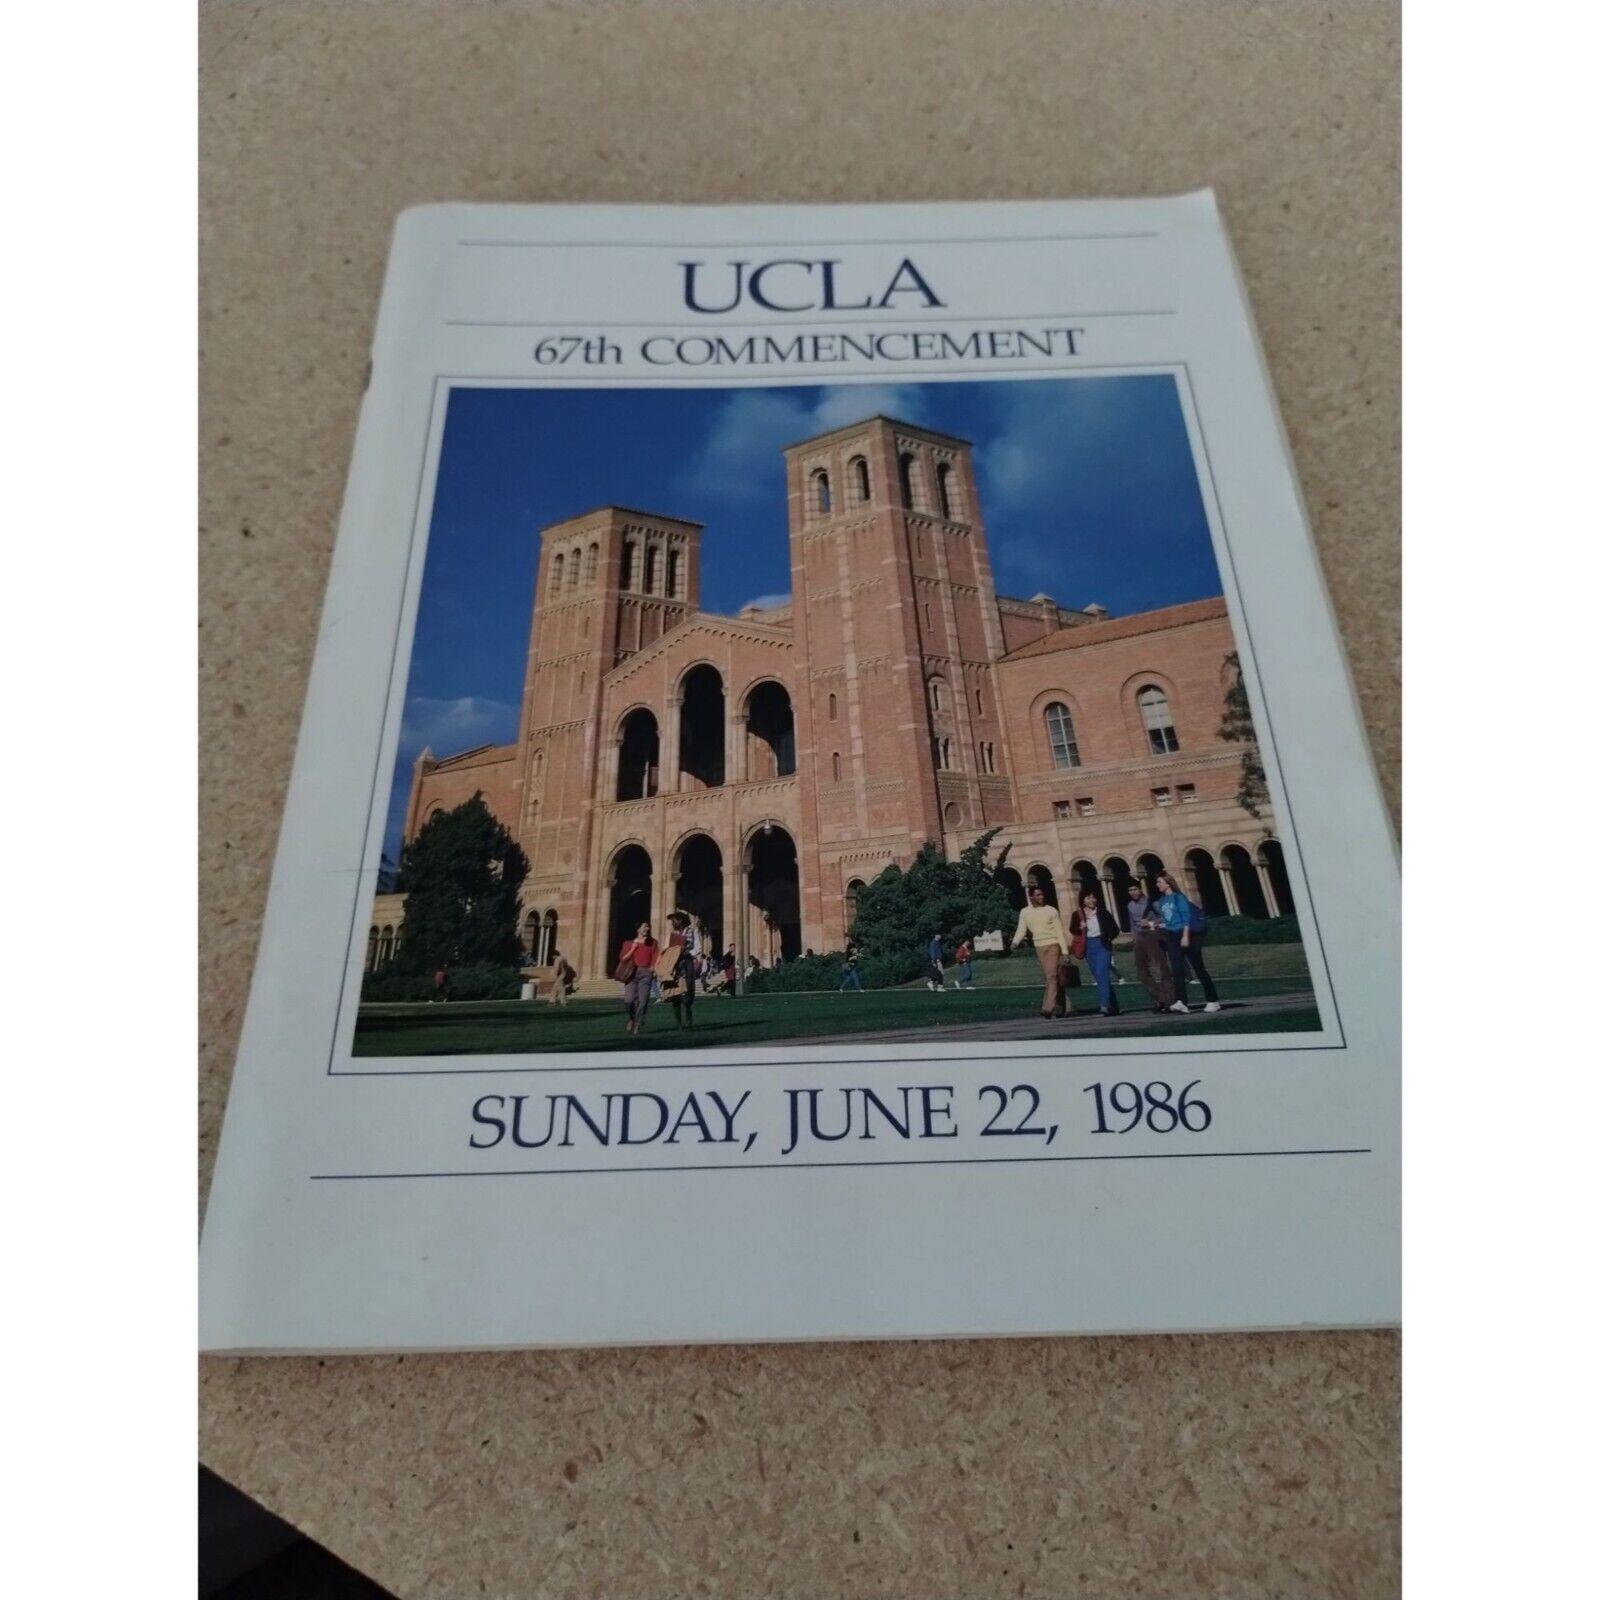 University of California Los Angeles UCLA 1986 67th Commencement June 22 Program